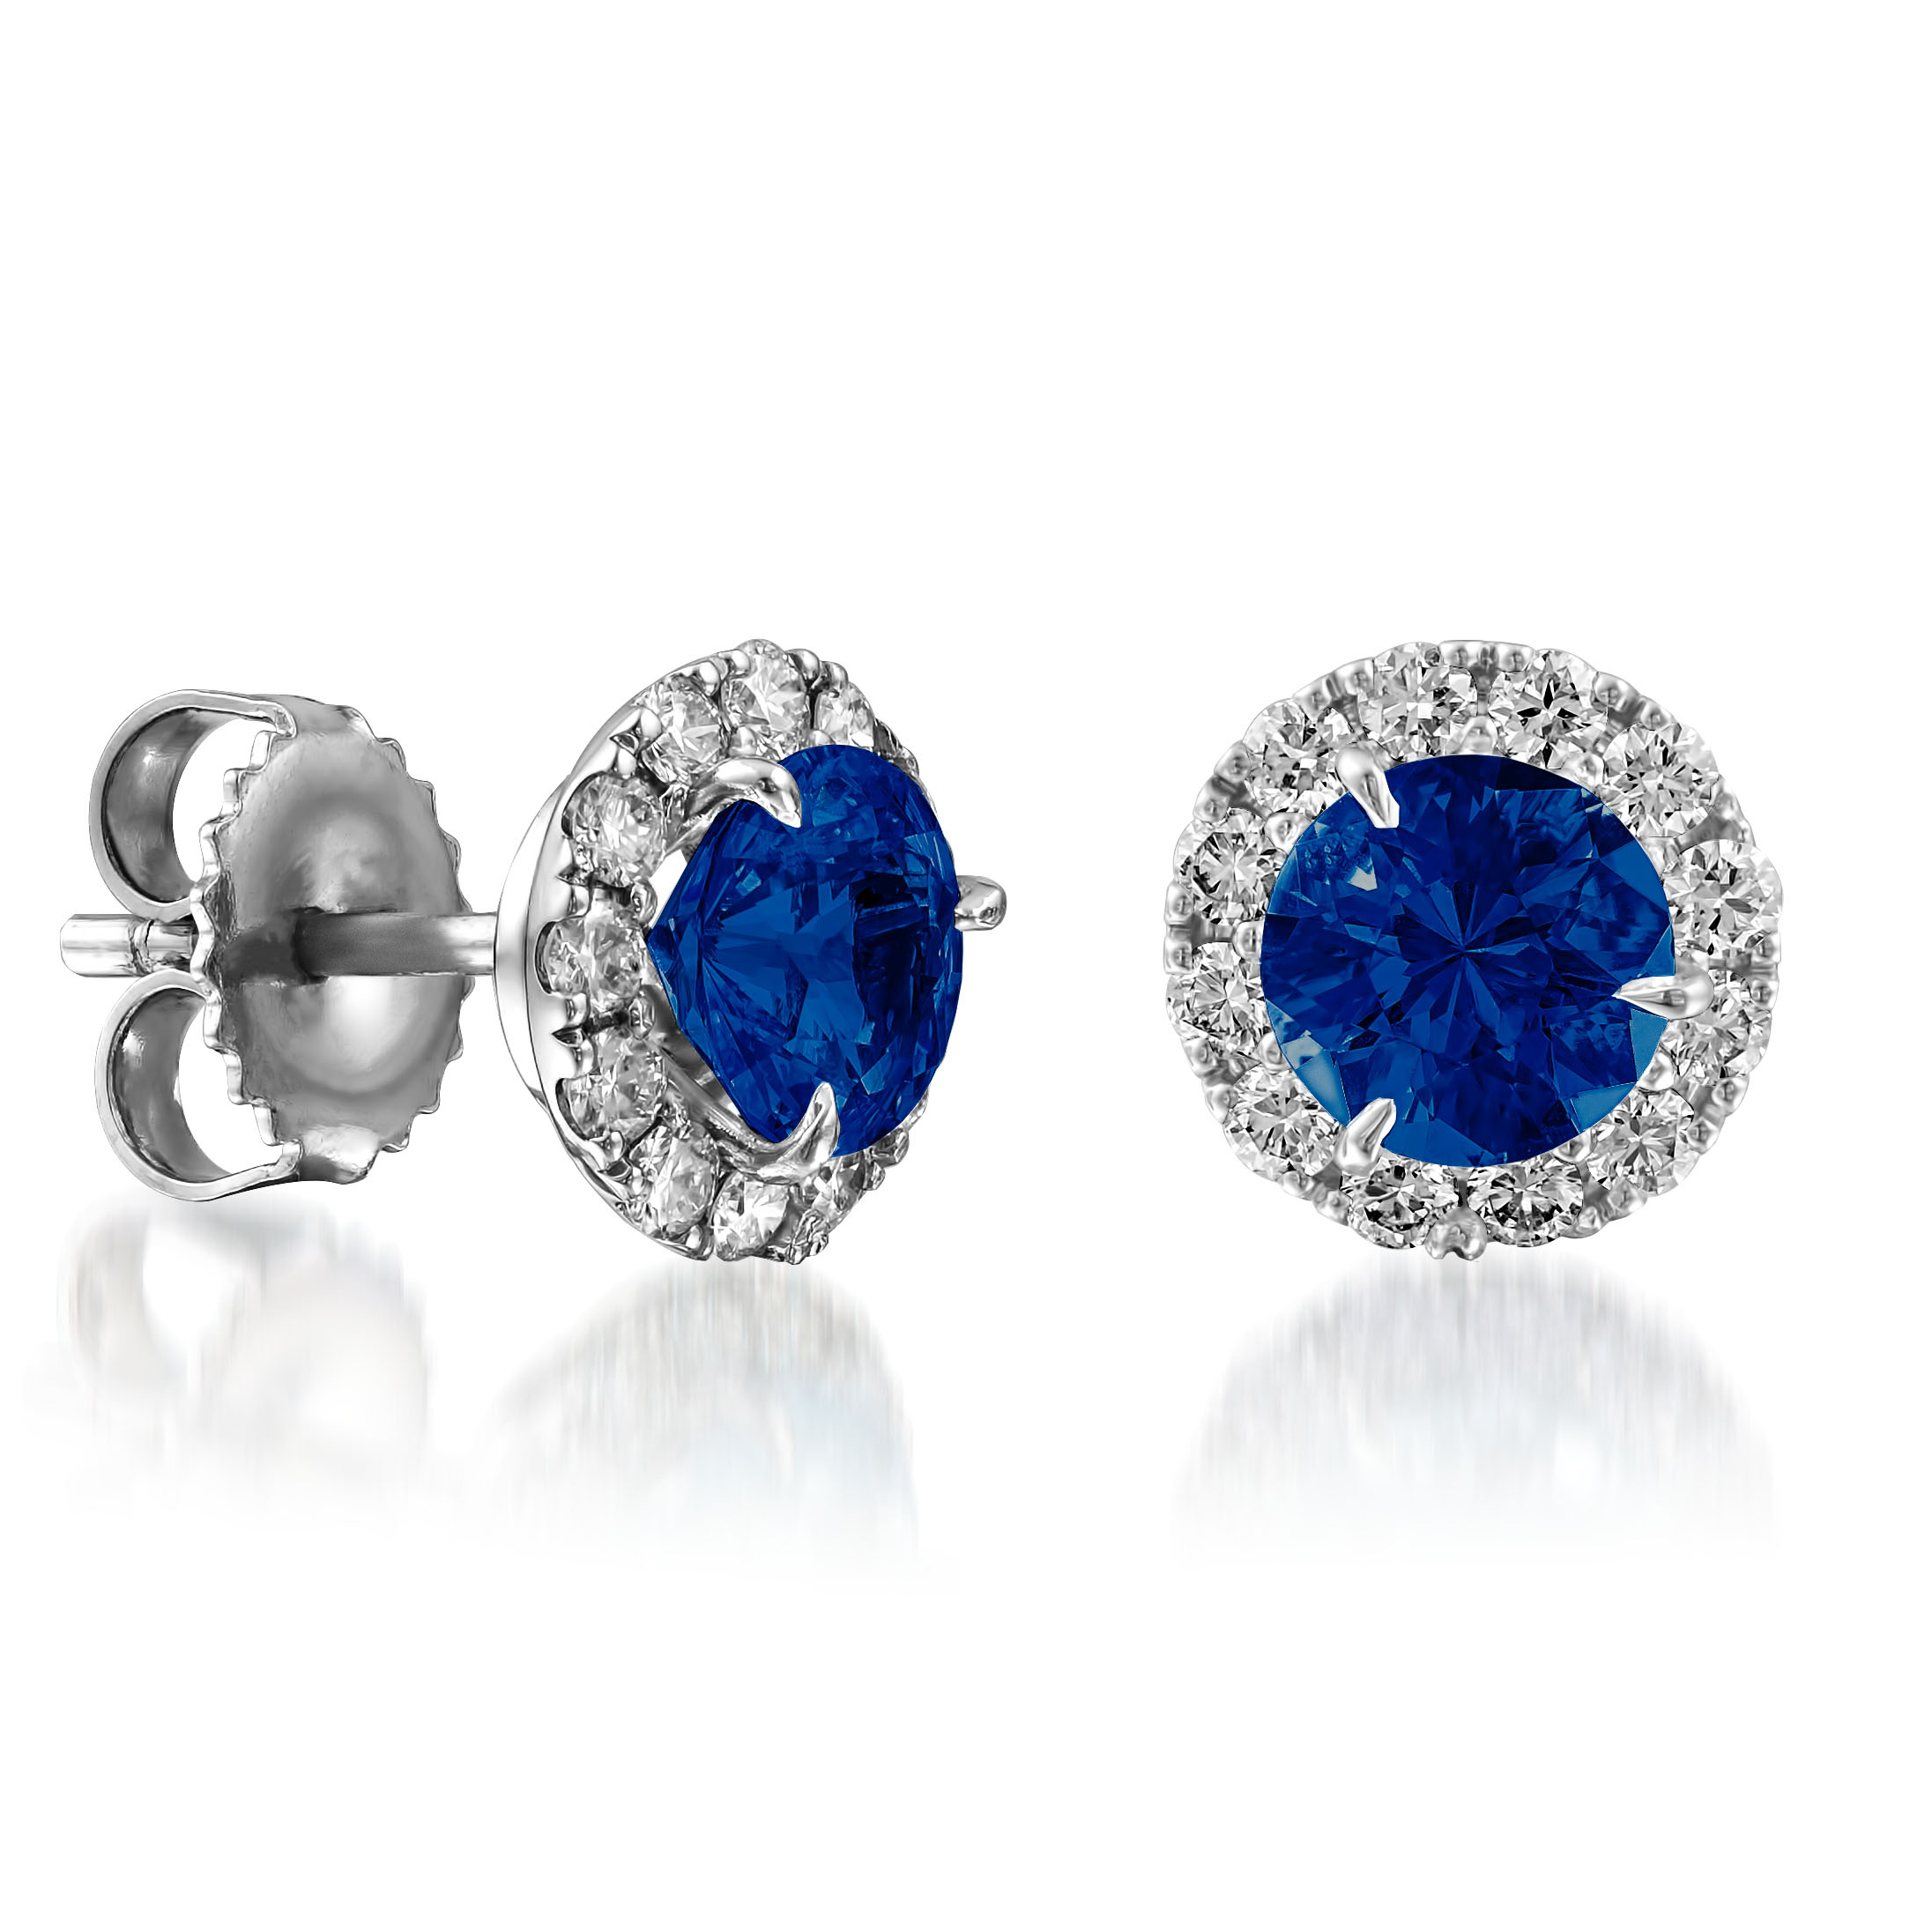 Sapphire earrings with a diamond halo